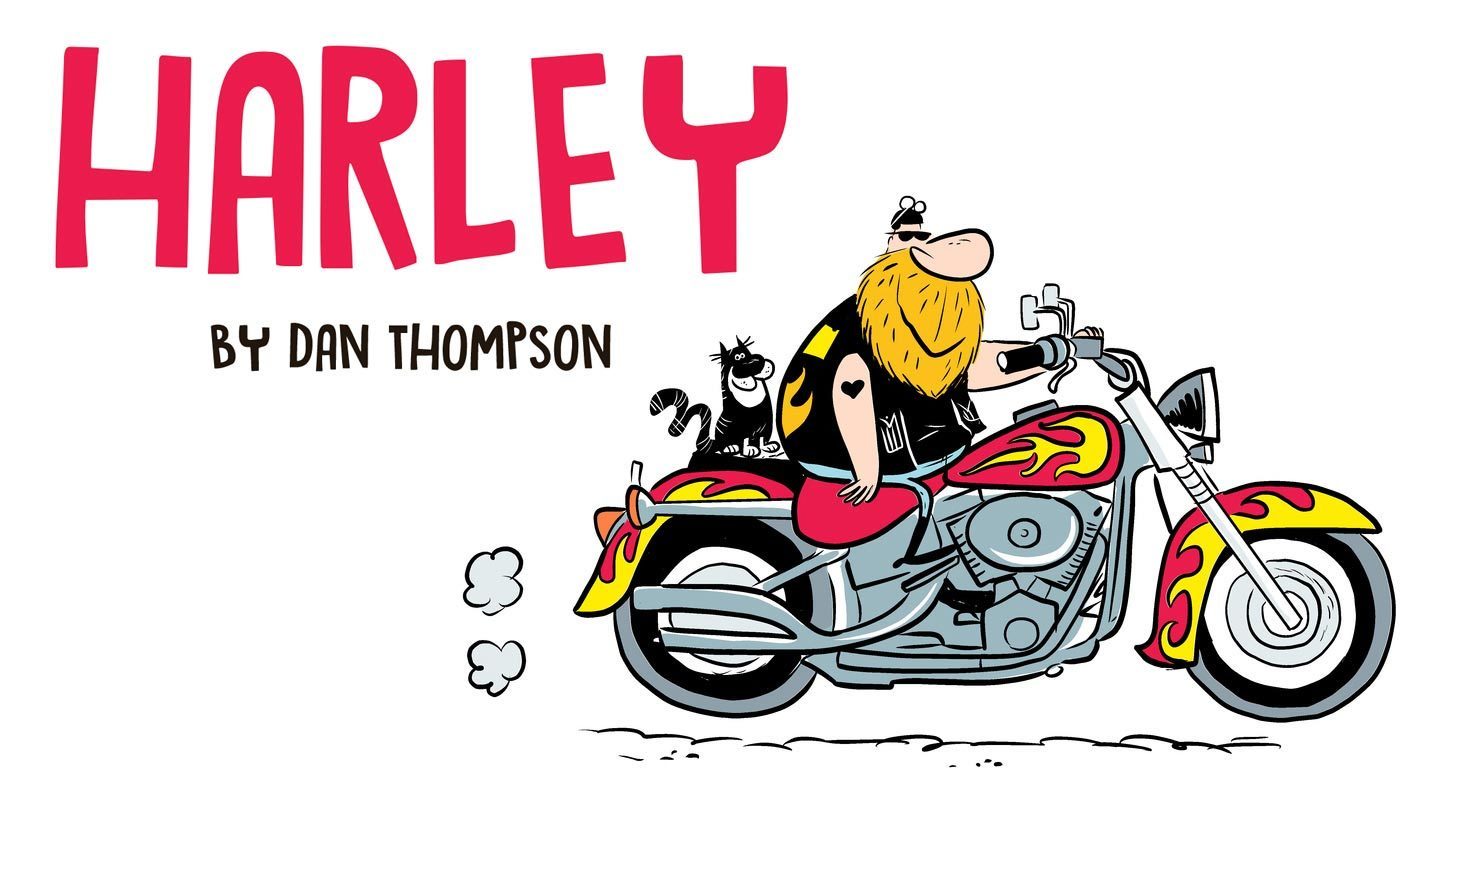 New Comic Alert: 'Harley' By Dan Thompson